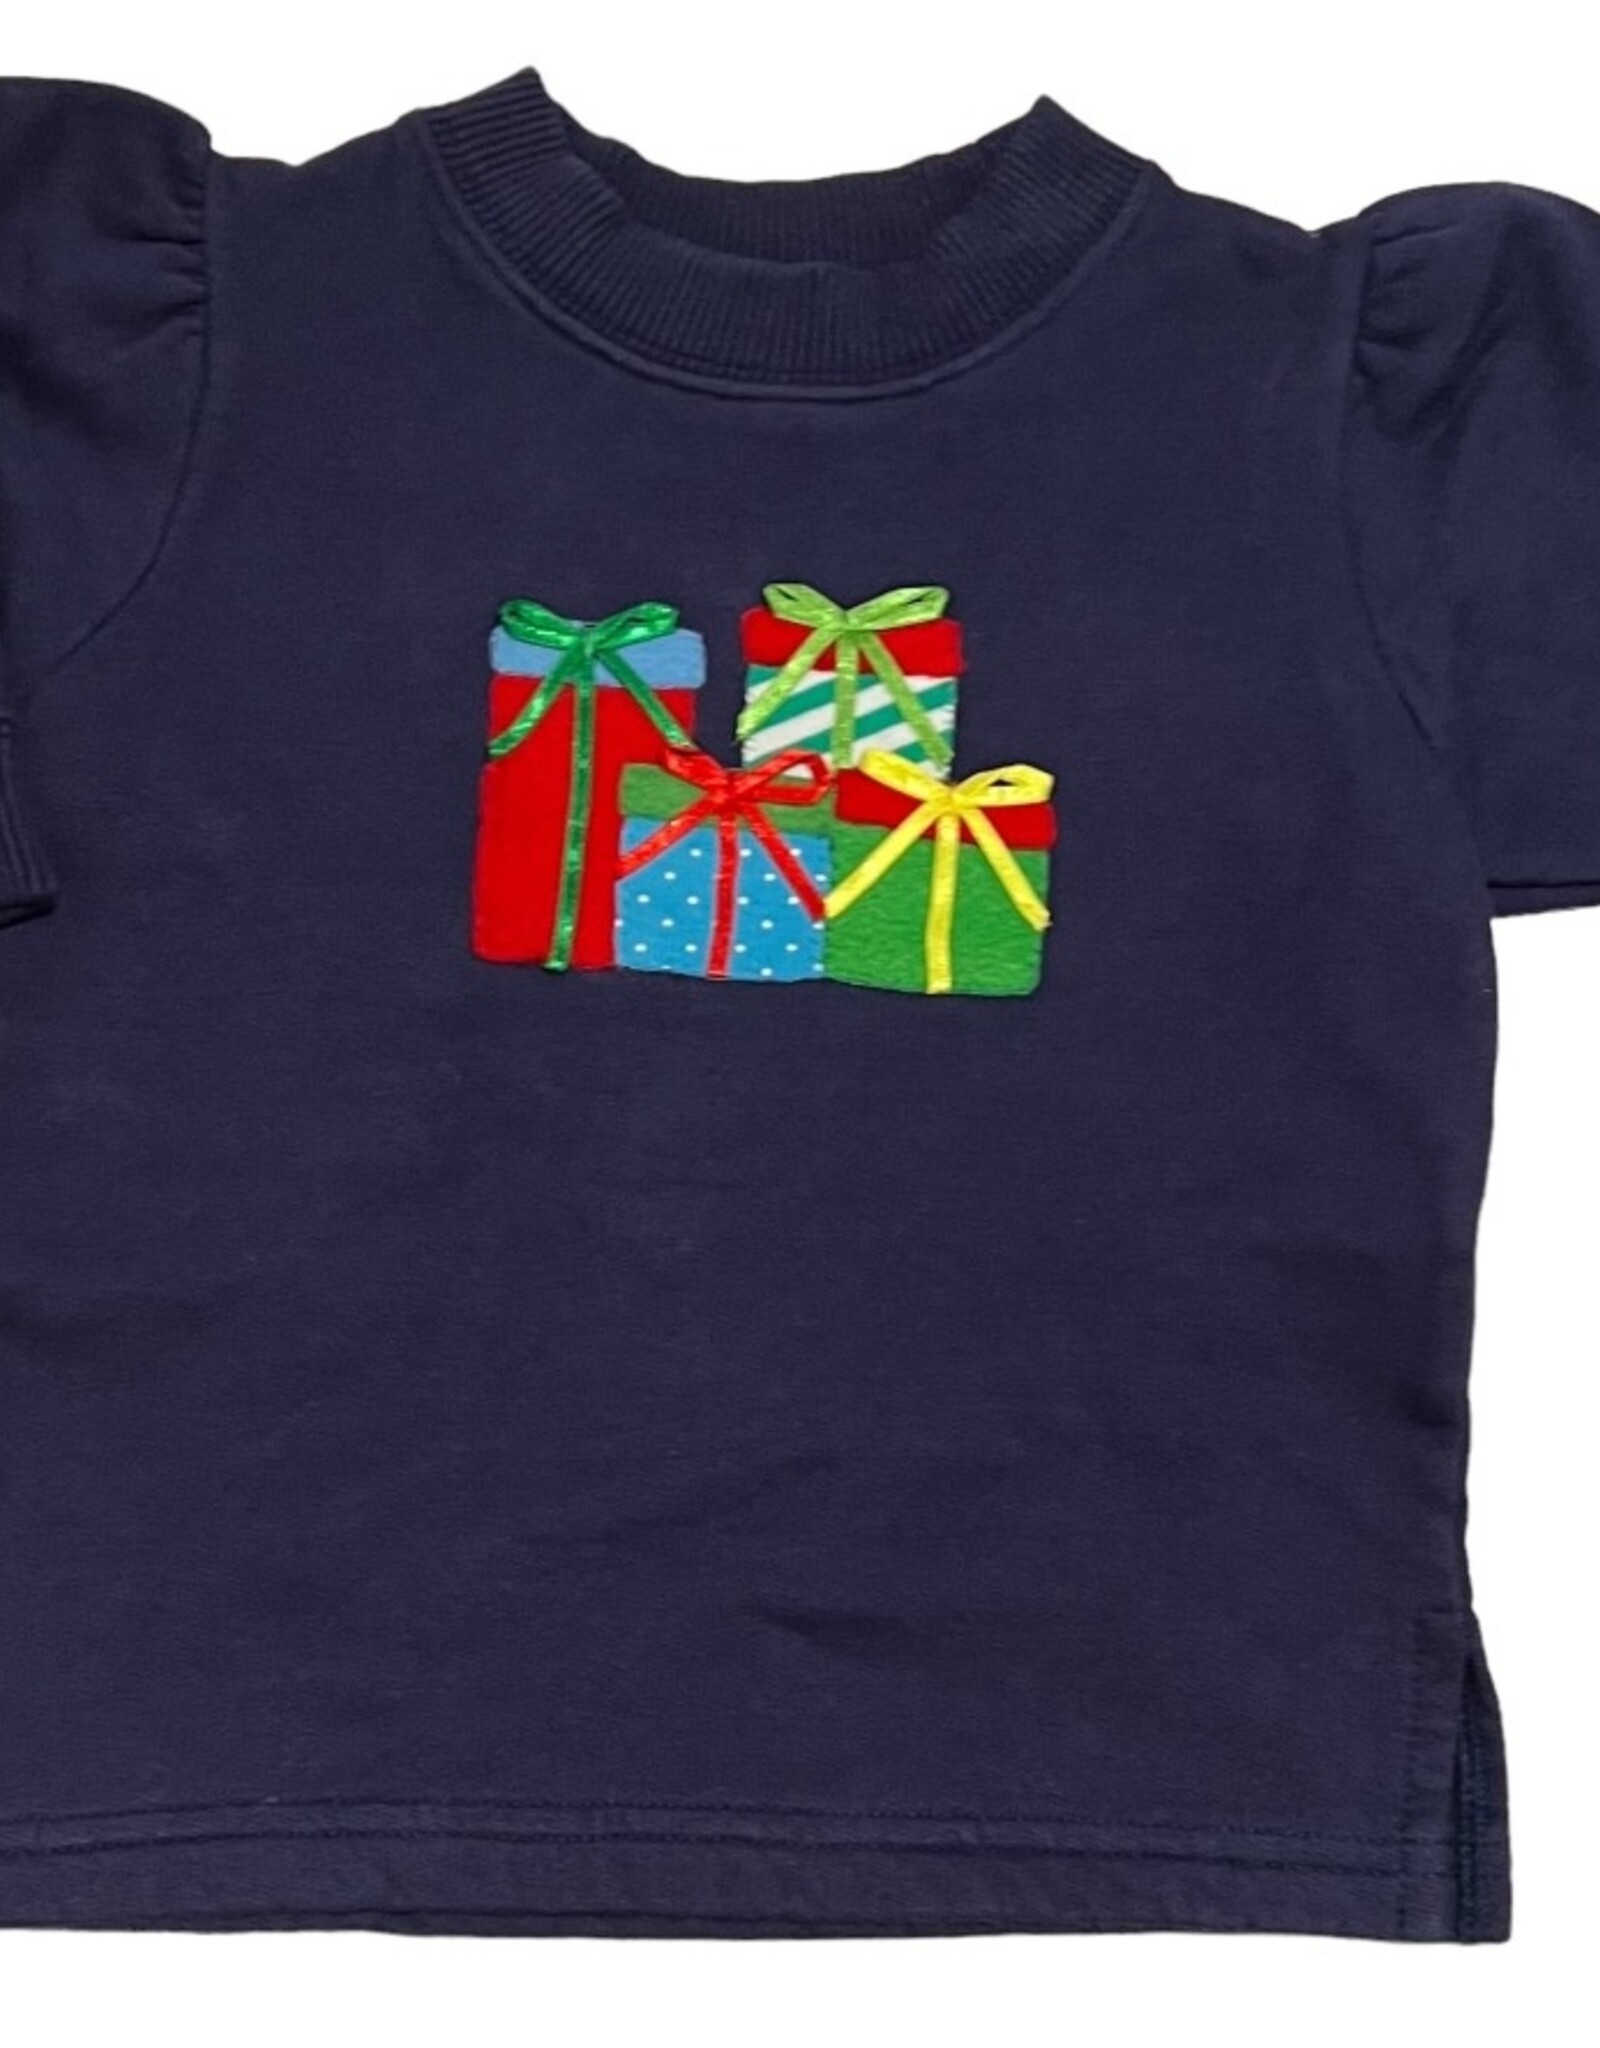 Luigi Kids X-mas Gifts Sweatshirt